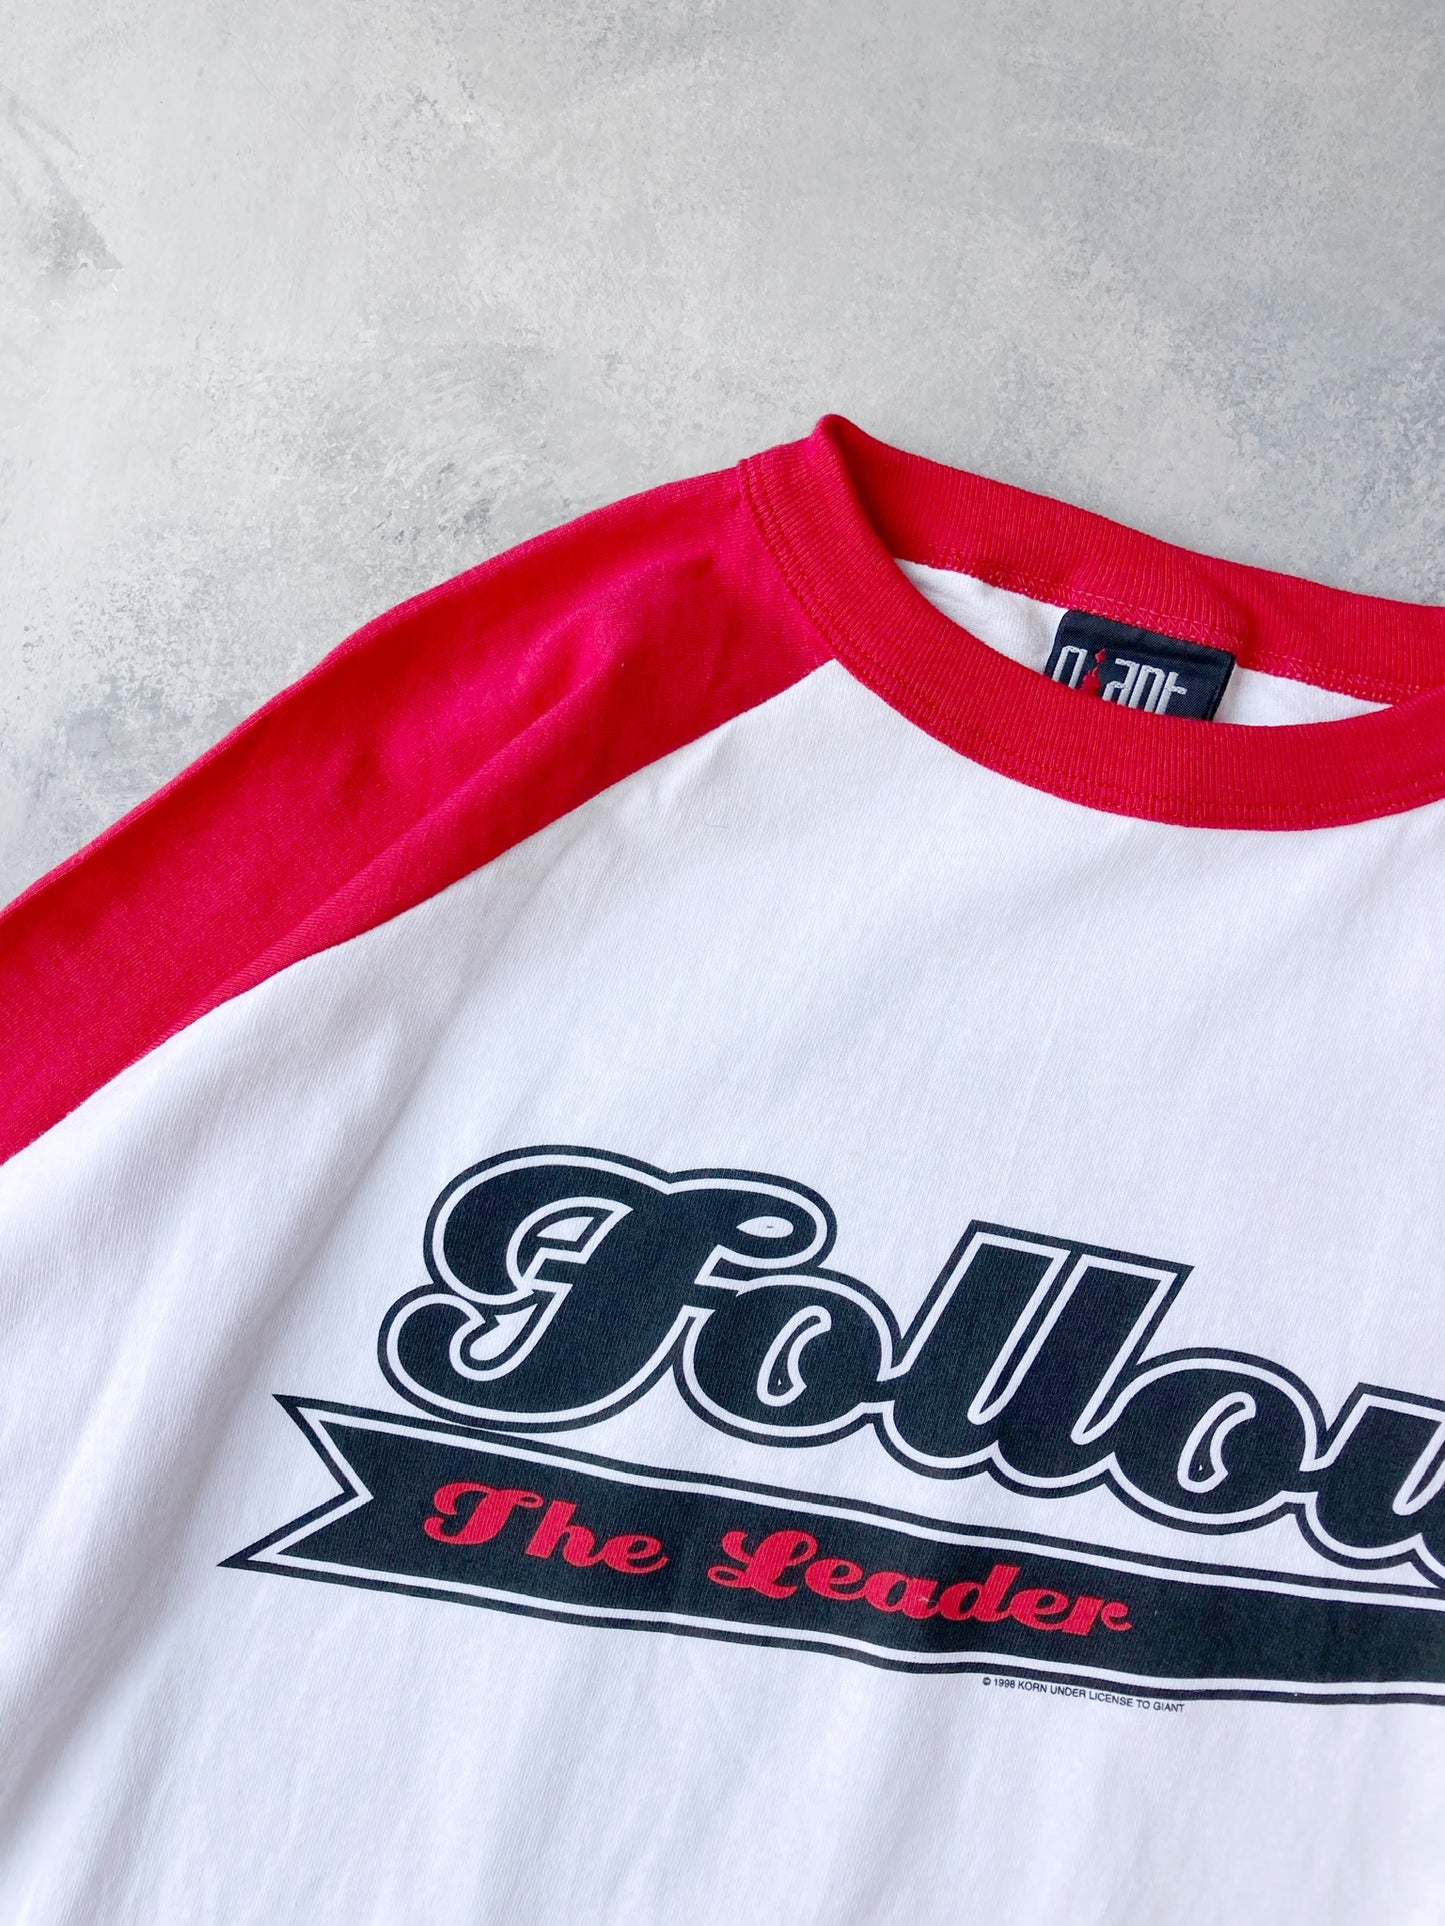 Korn Follow the Leader Raglan Shirt '98 - Large